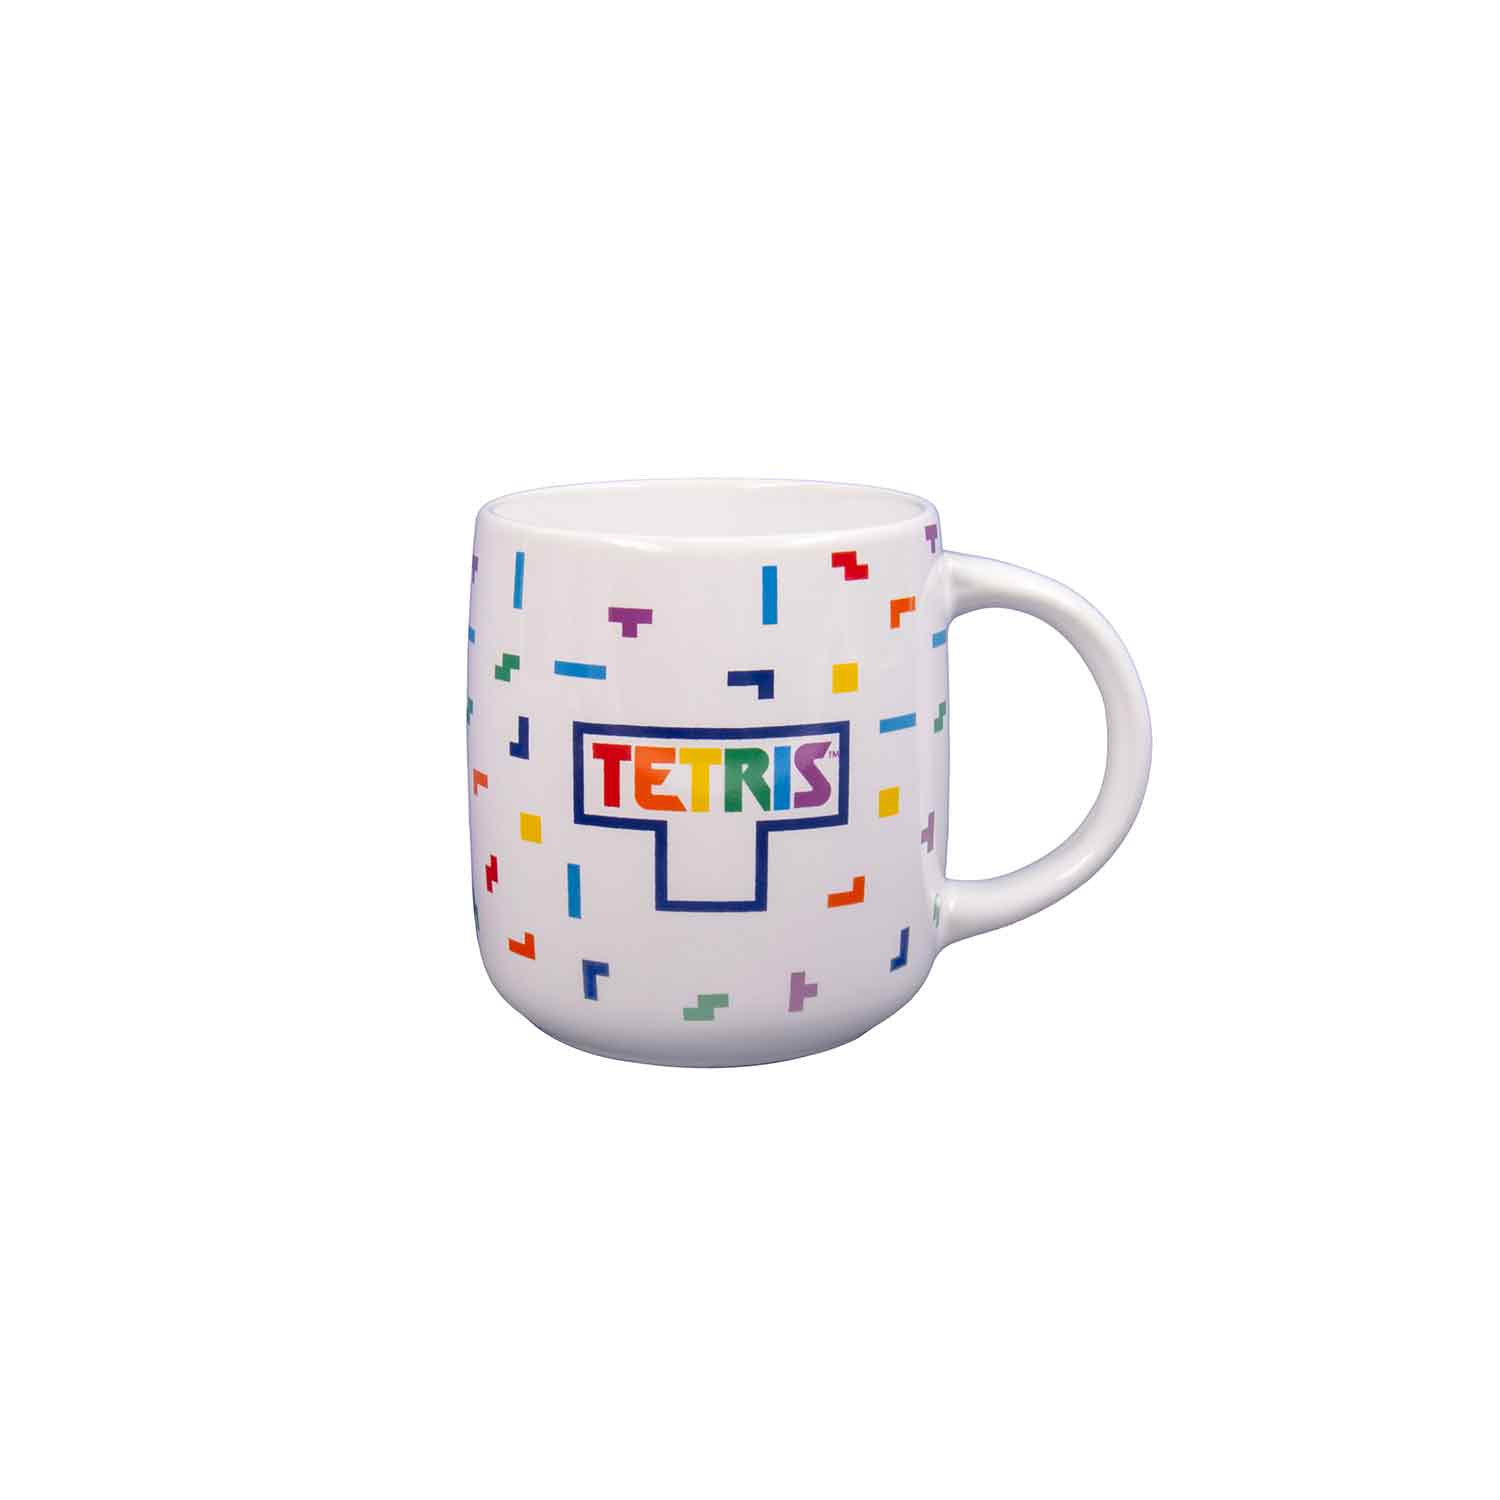 tetris-mug-and-socks